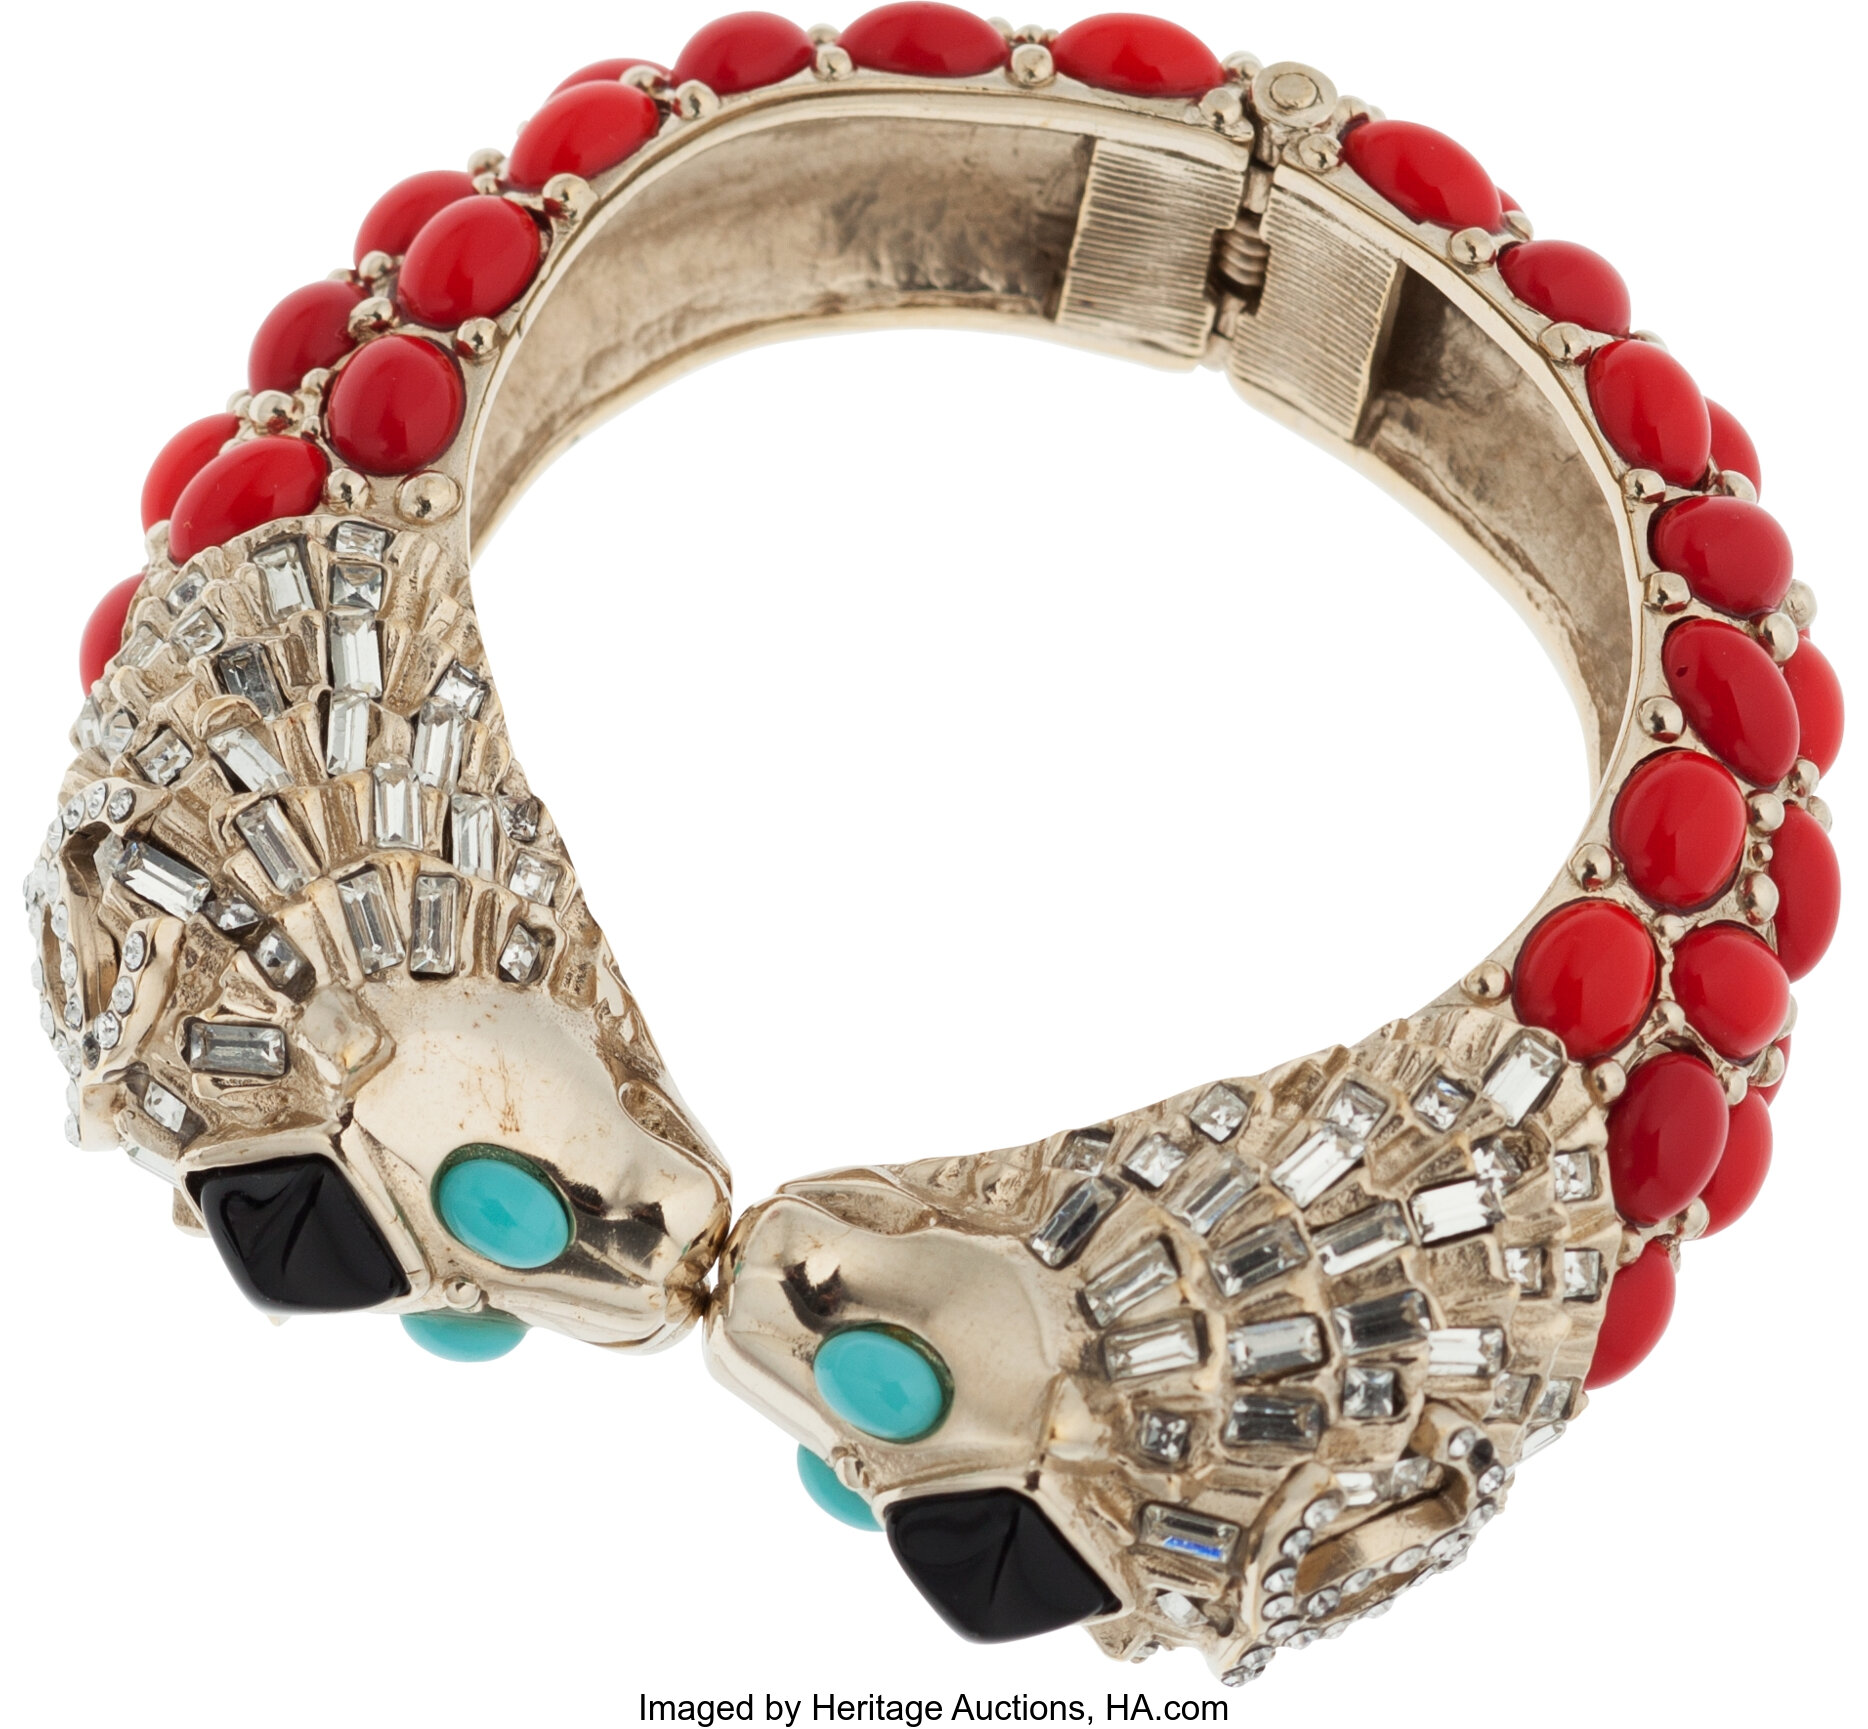 Archive Double Bracelet Taiga Leather - Fashion Jewelry